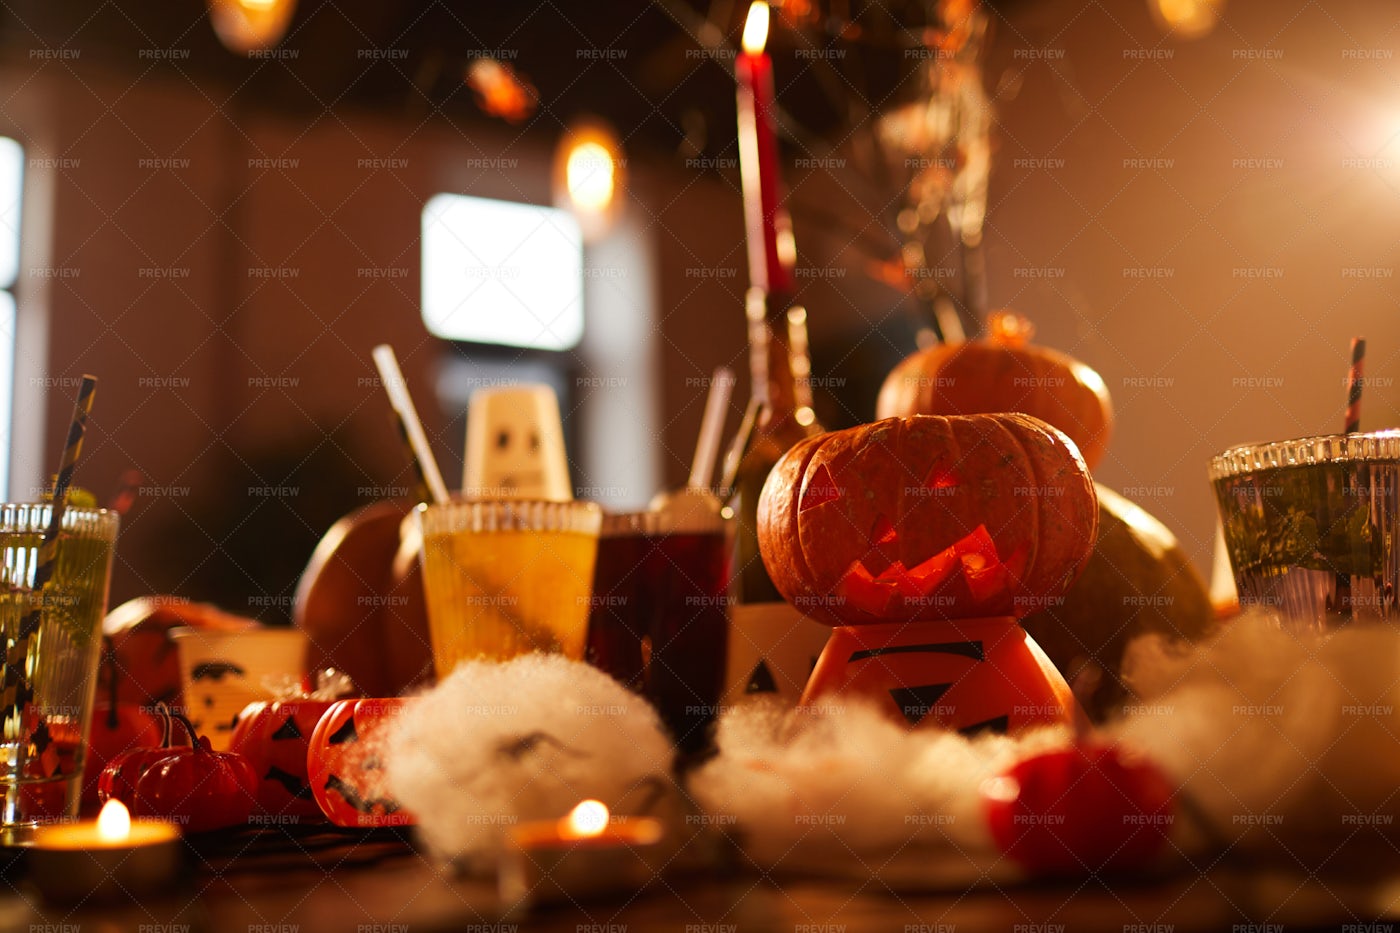 Halloween Party Background: Stock Photos